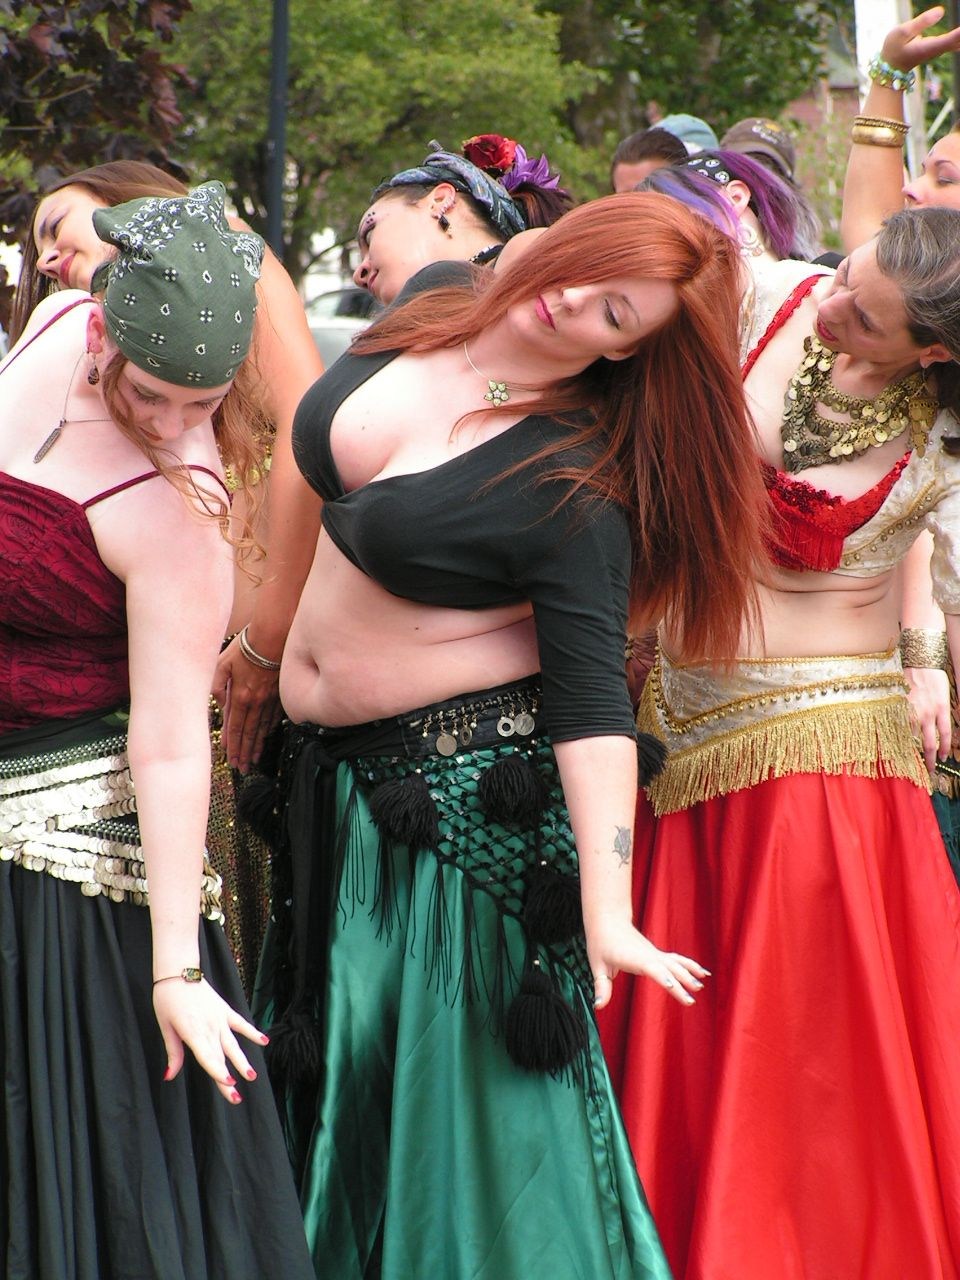 https://motherlesspics.com/uploads/posts/2023-03/1679229644_motherlesspics-com-p-porn-fat-woman-dancing-and-undressing-in-t-80.jpg